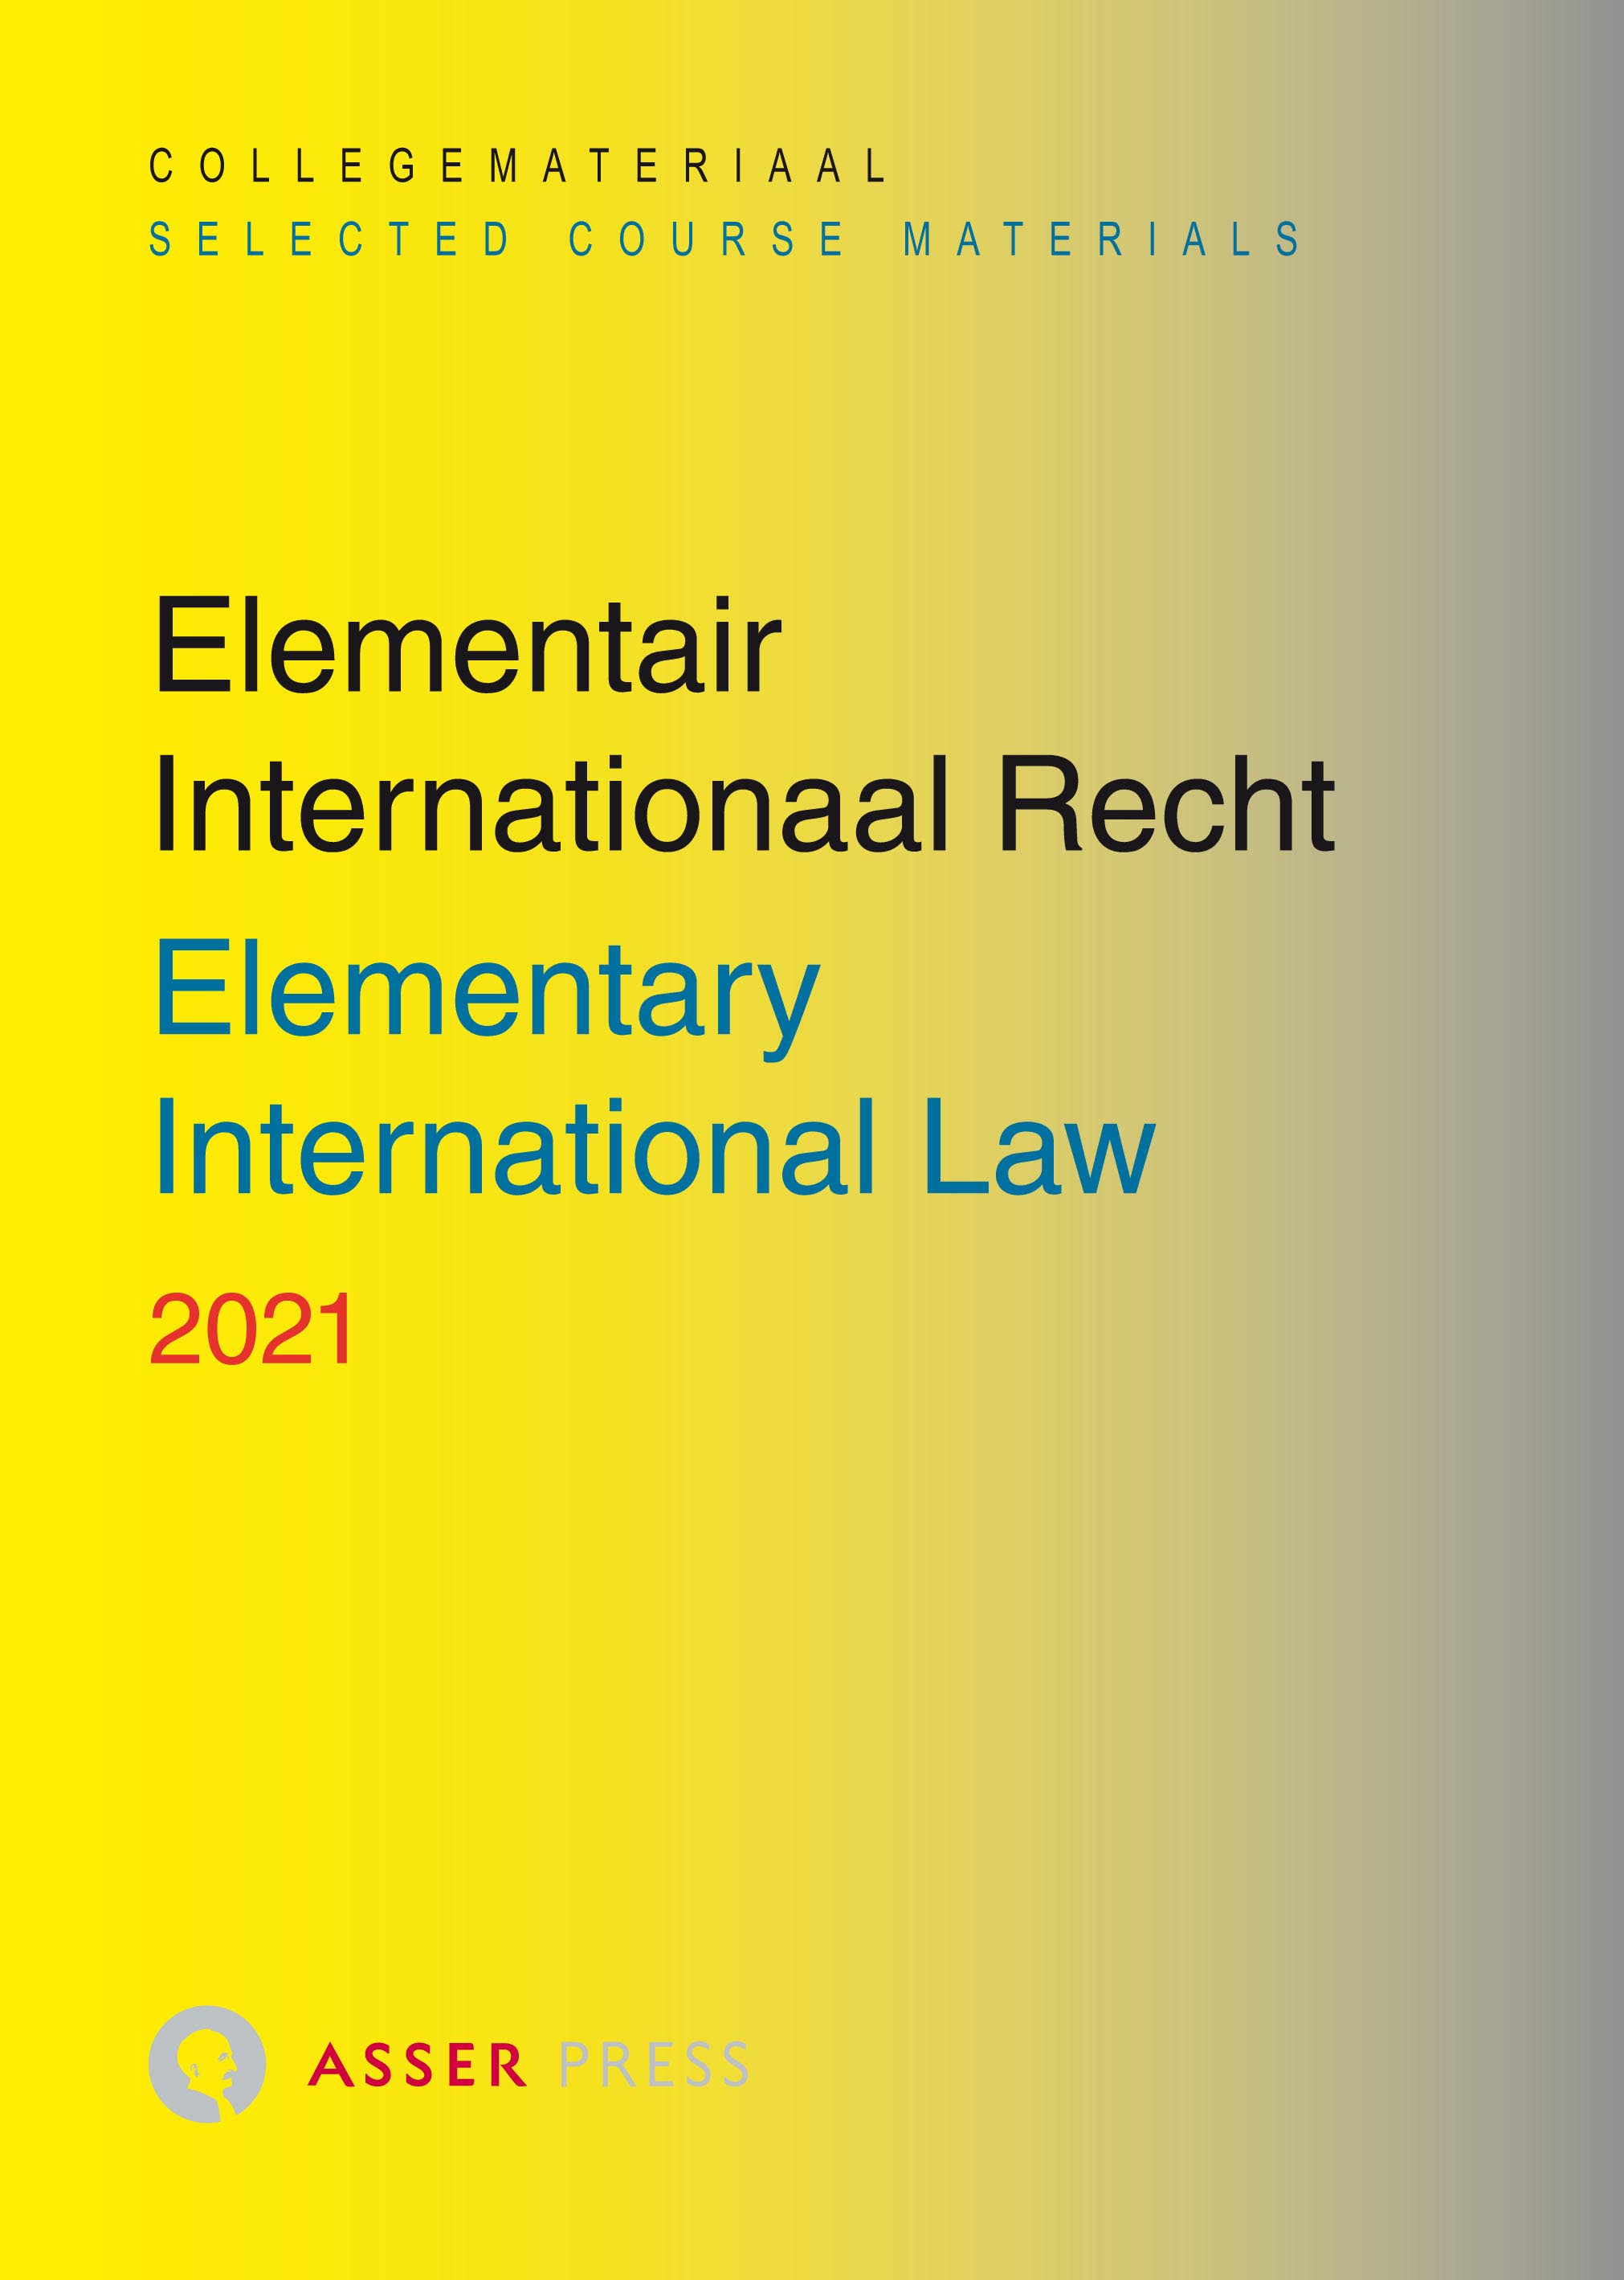 Elementair Internationaal Recht 2021/Elementary International Law 2021